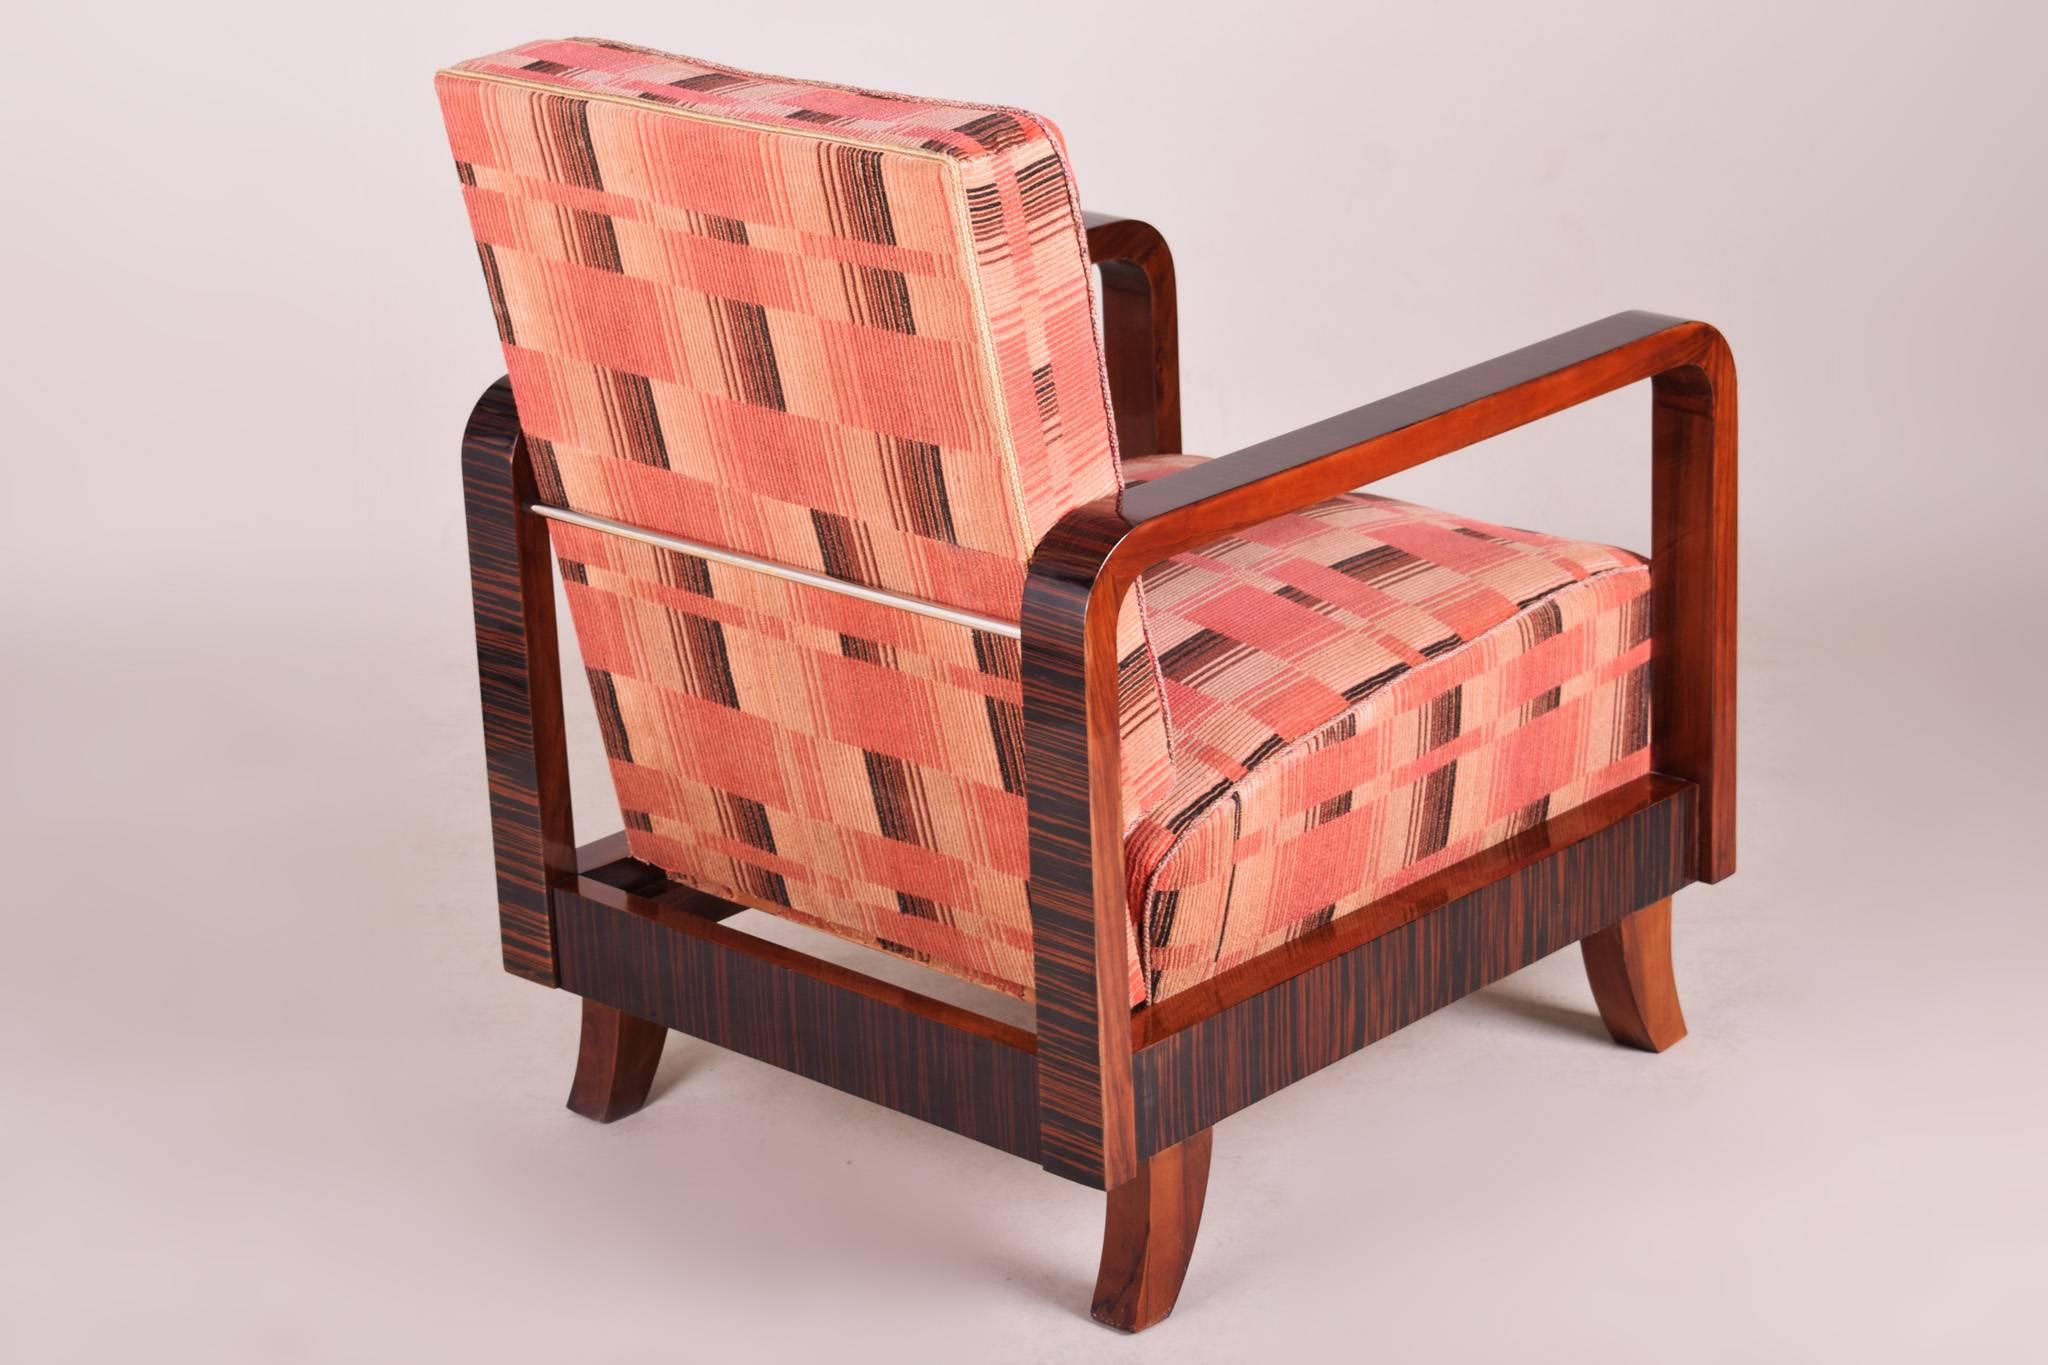 Czech Art Deco Armchair, Period 1930-1939, Completely Restored, Original Fabric